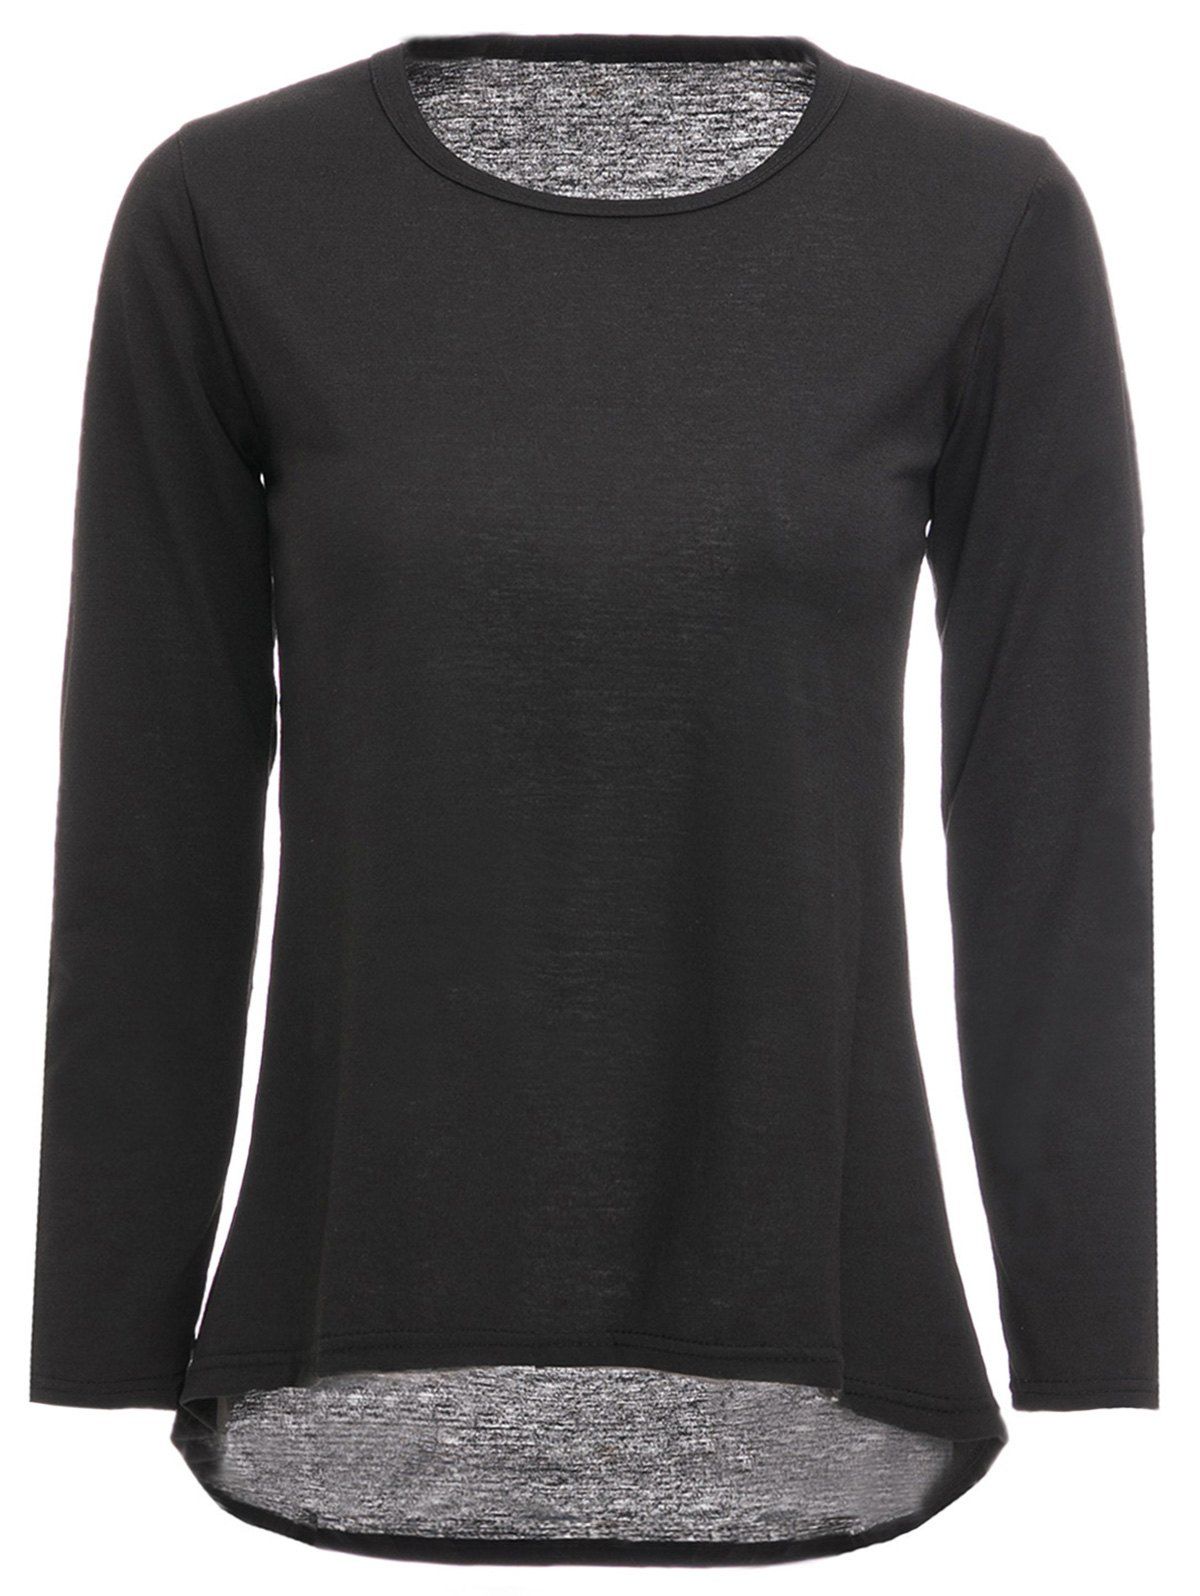 Black One Size Round Neck Plain Long Sleeve T-shirt | RoseGal.com